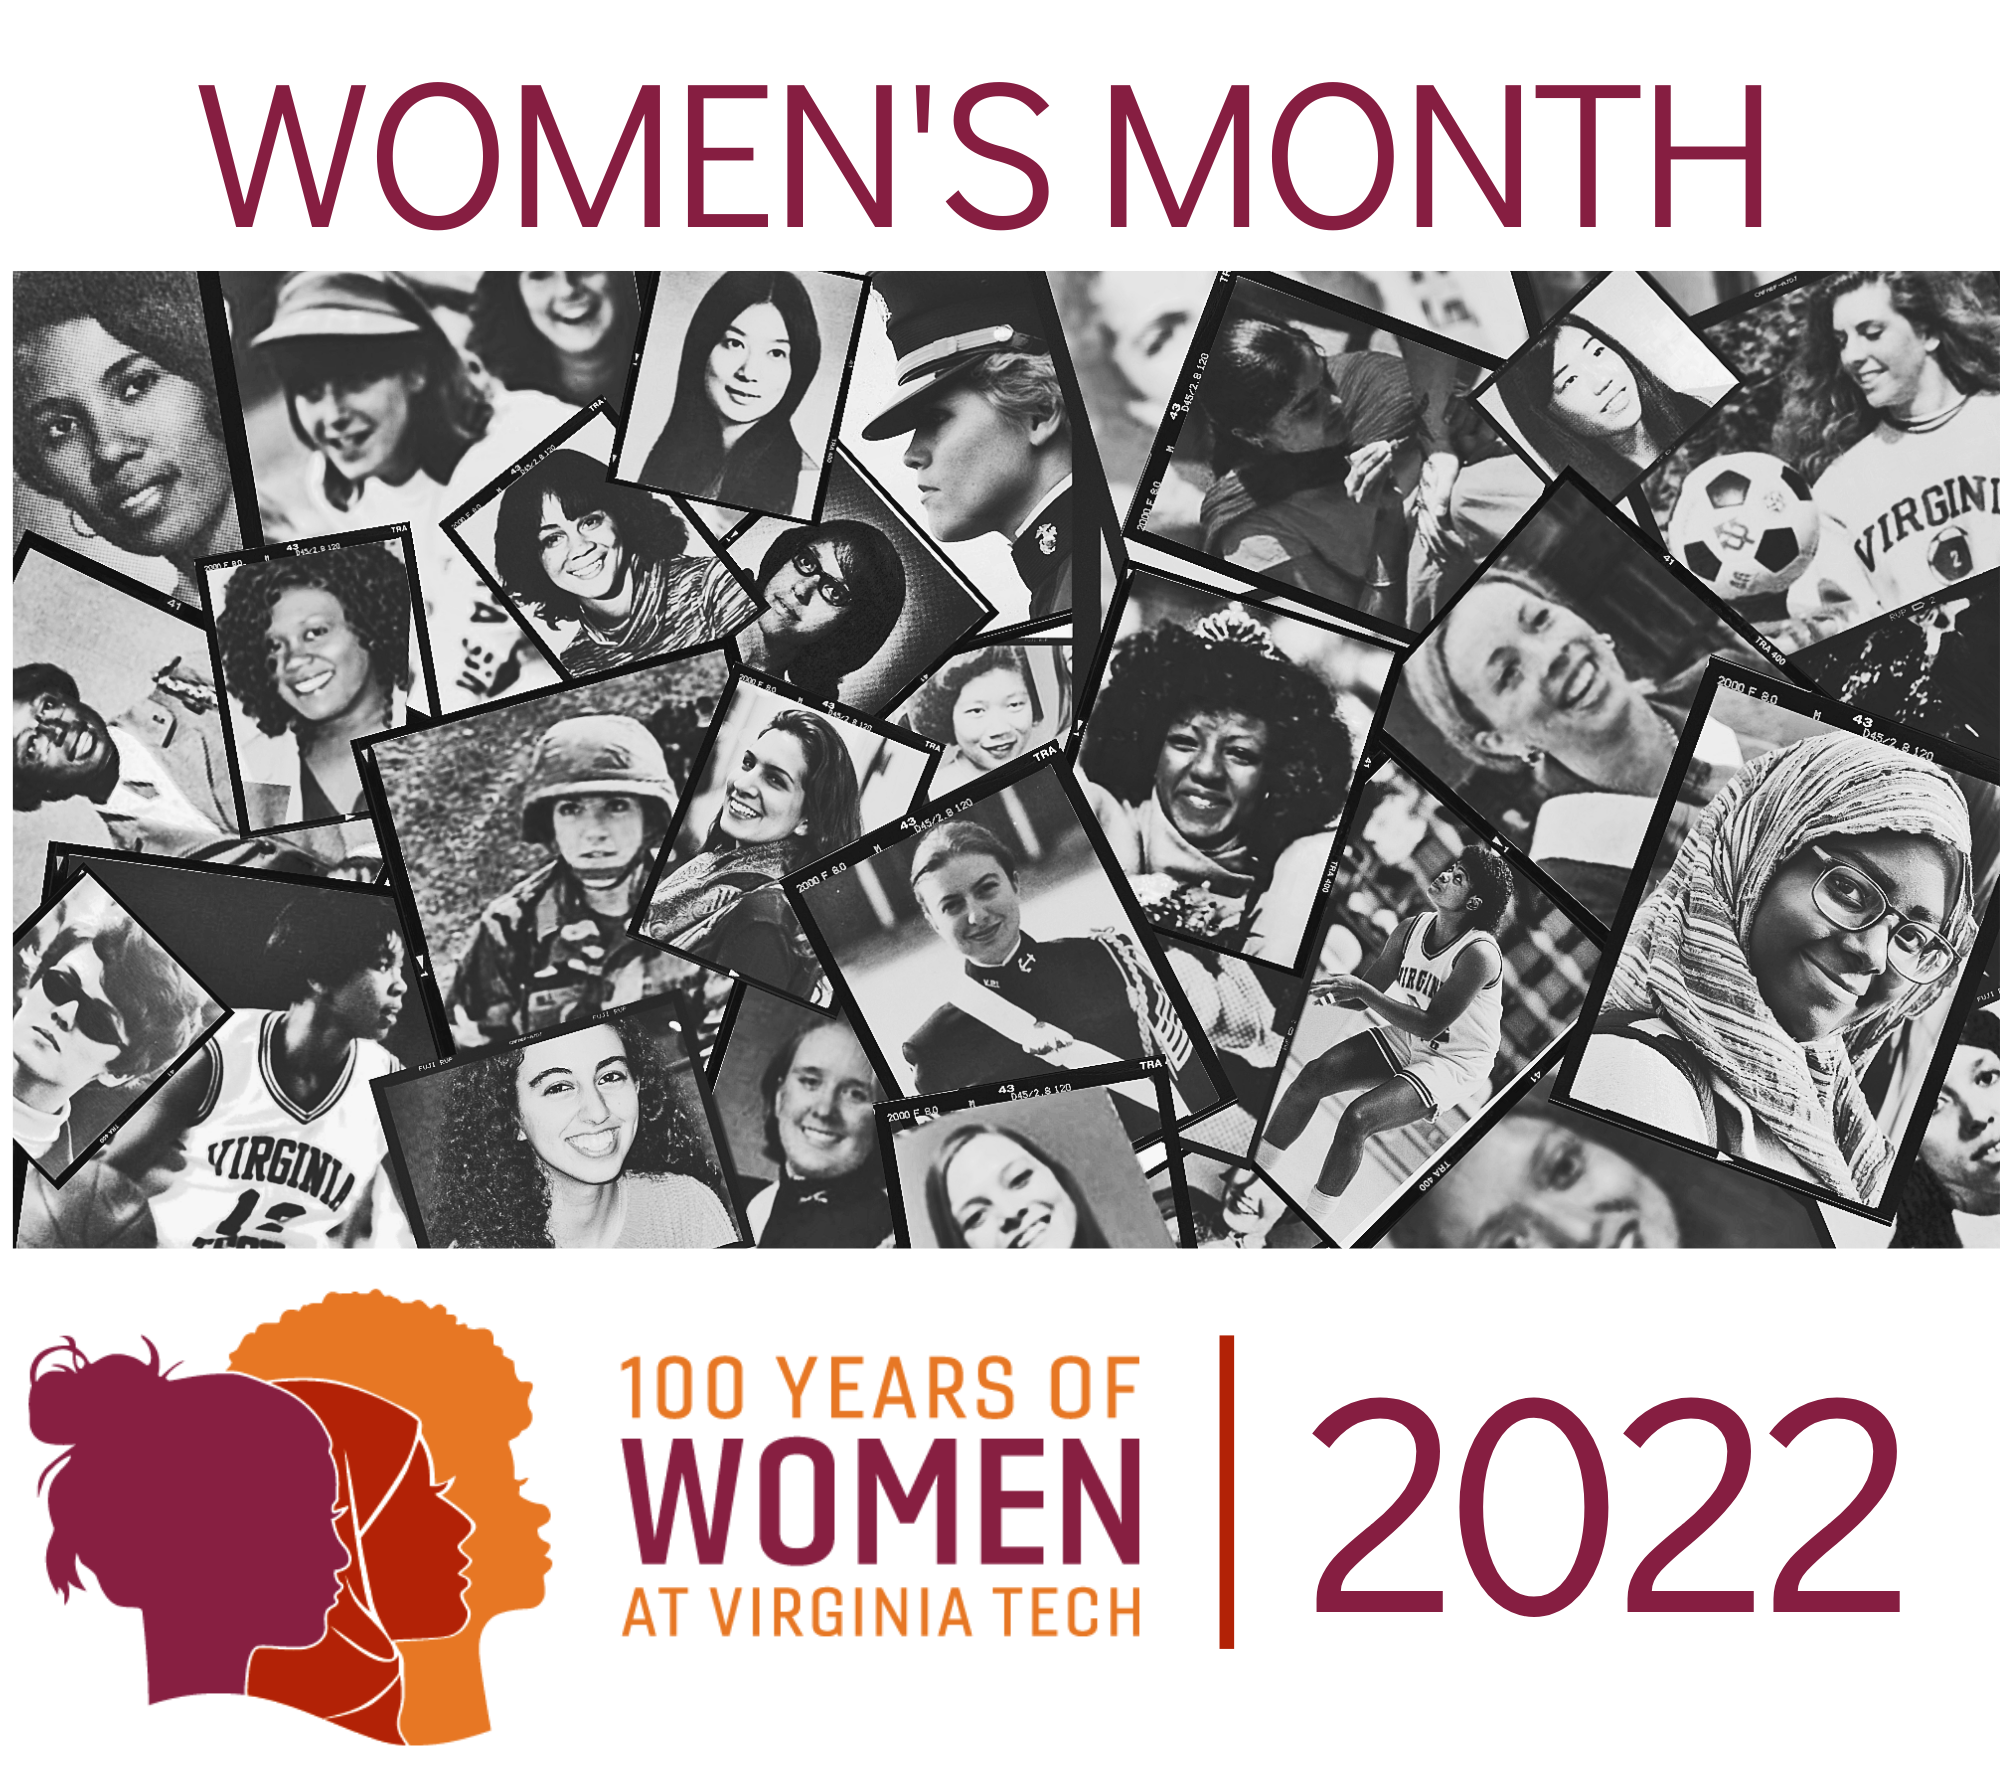 Women's Month 2022: 100 Years of Women at Virginia Tech logo